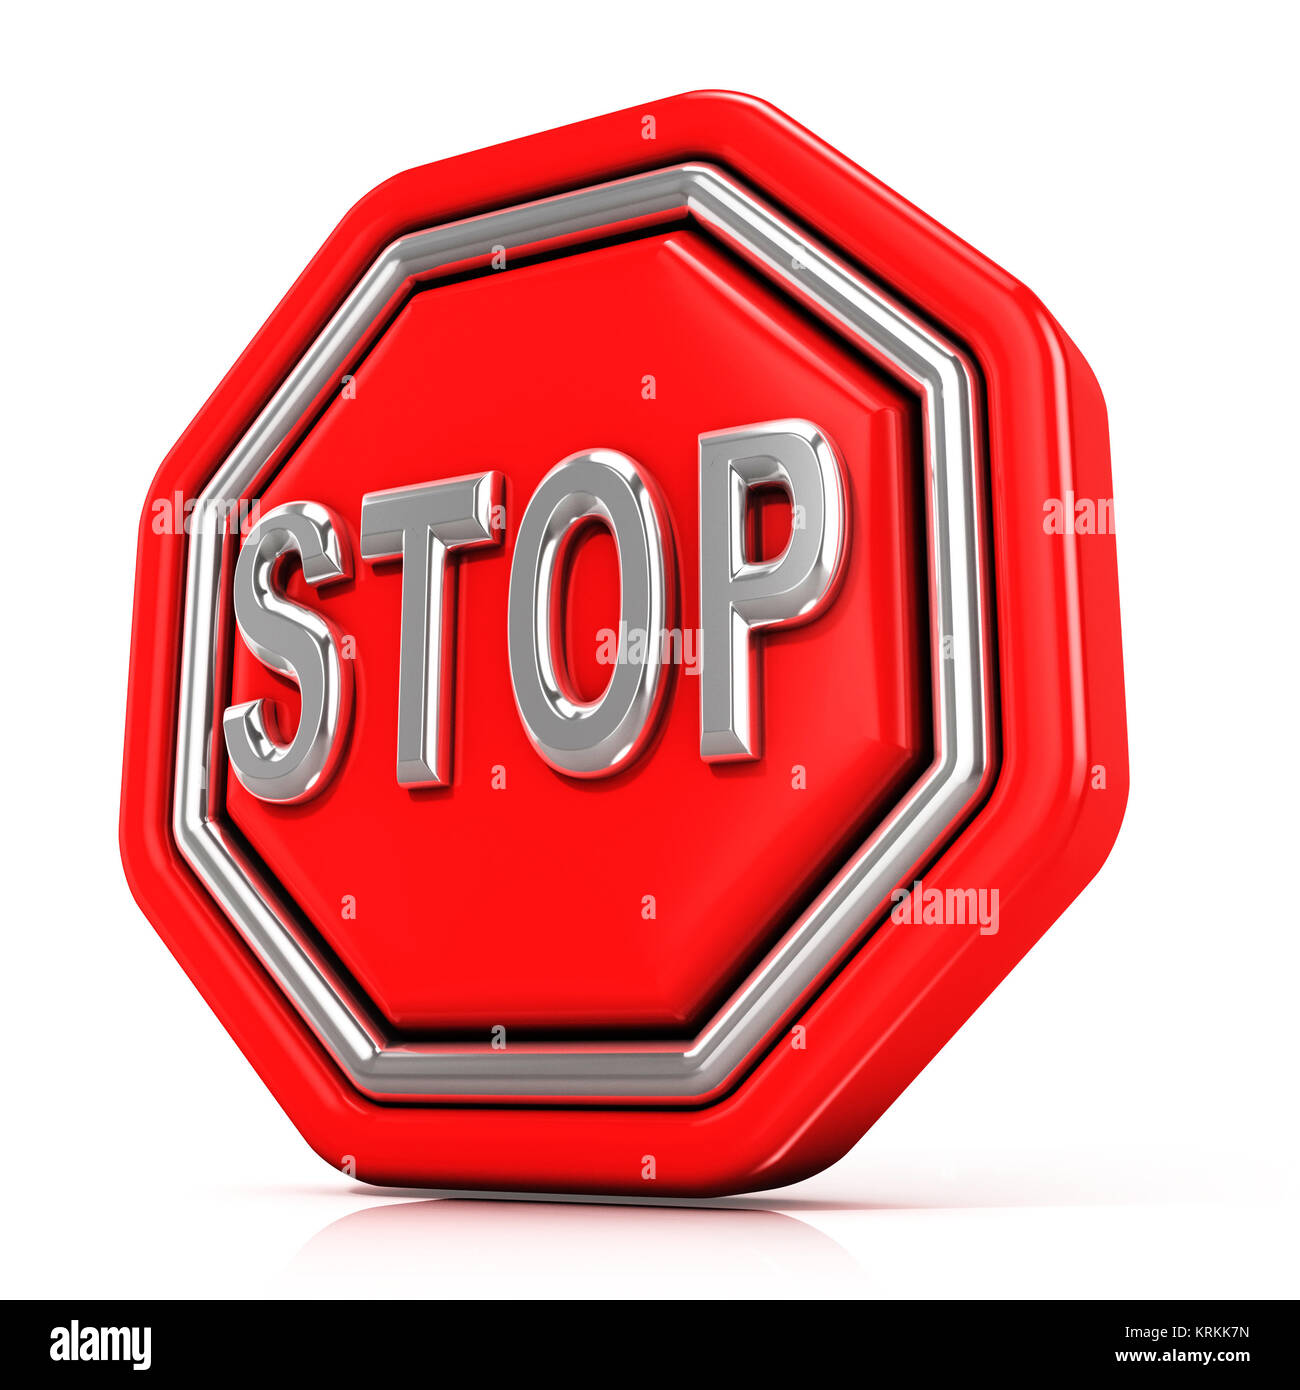 Stop sign. 3D Stock Photo